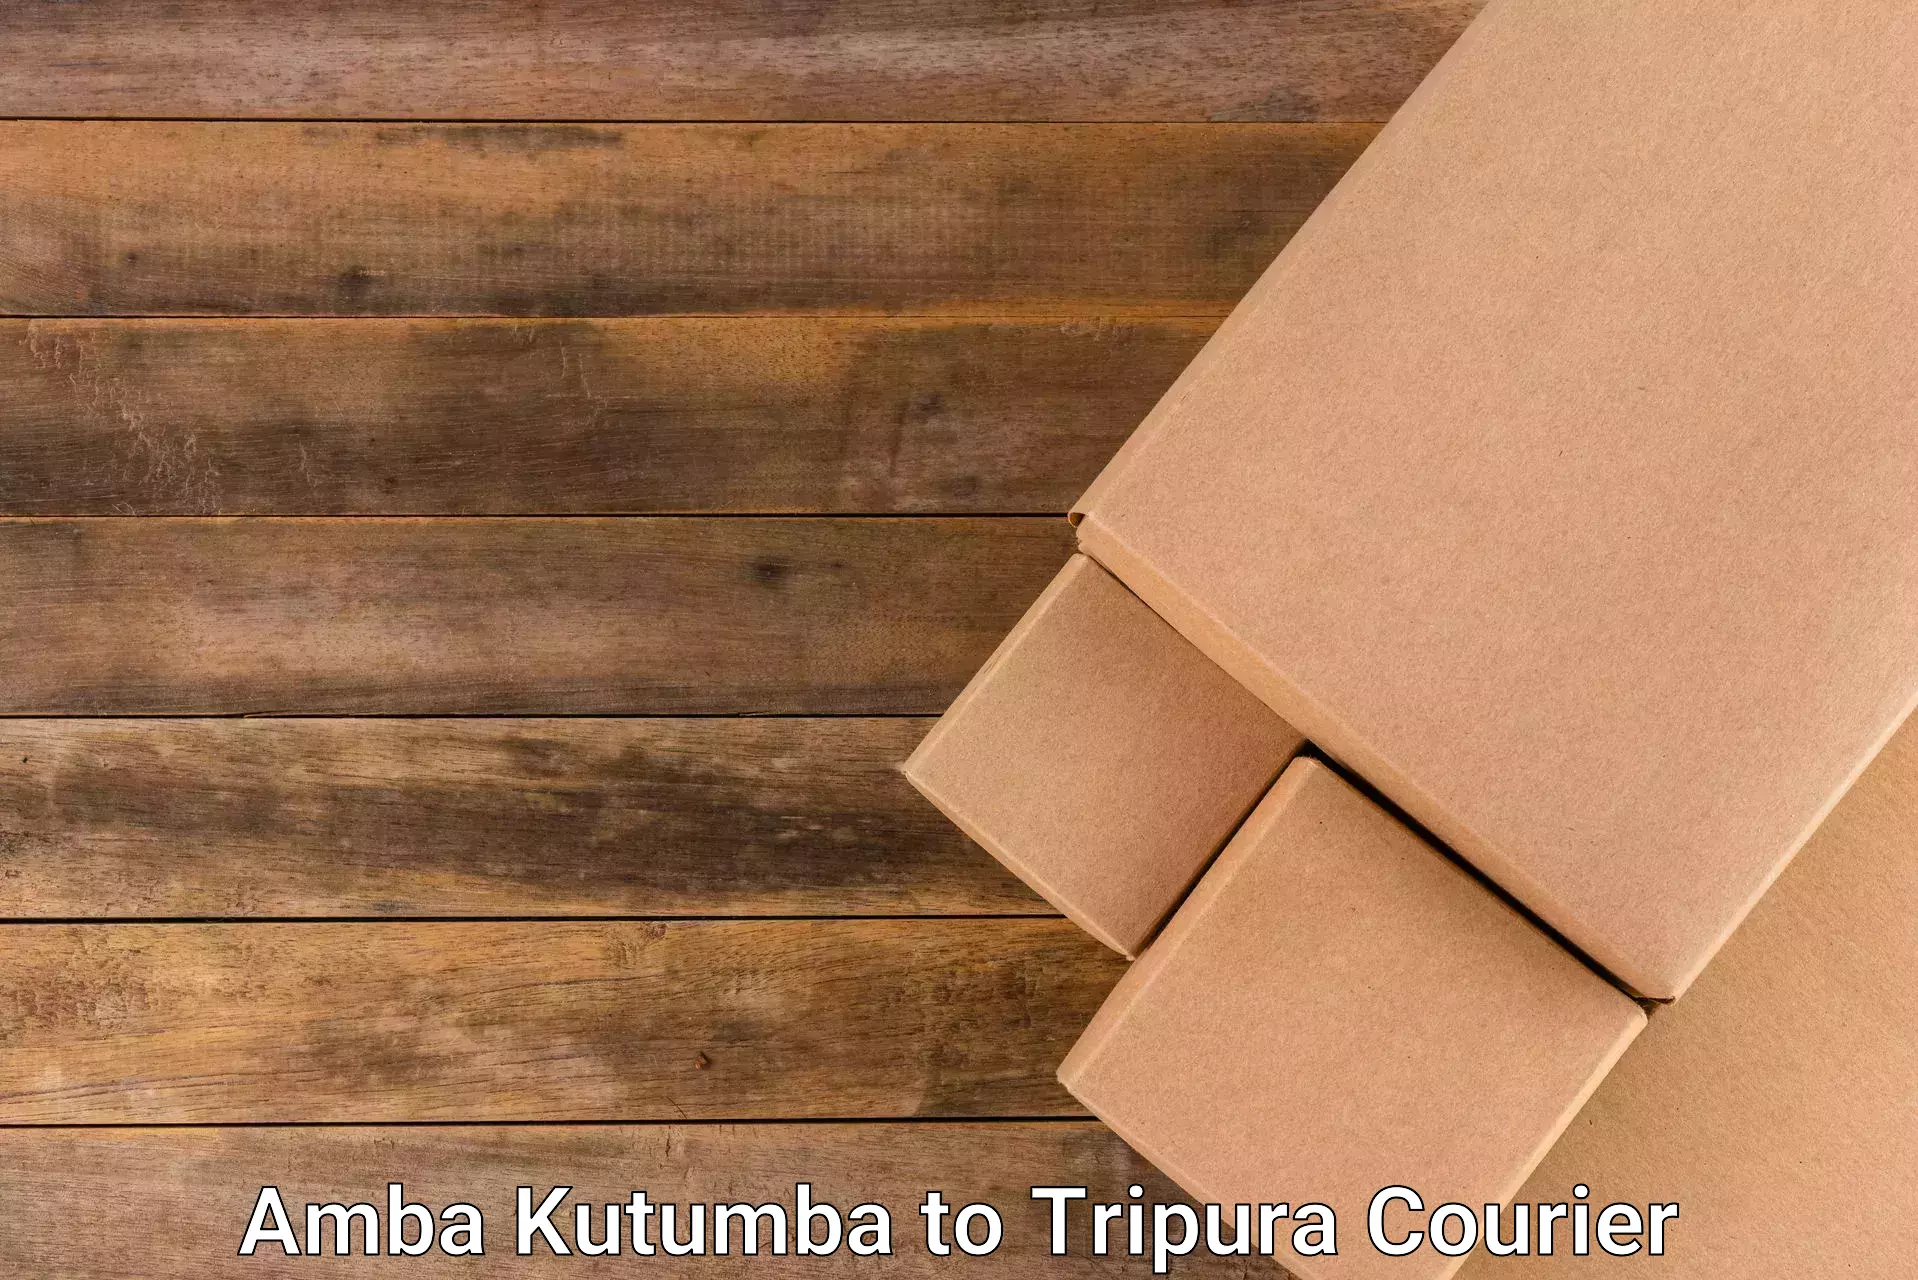 Efficient parcel service Amba Kutumba to North Tripura